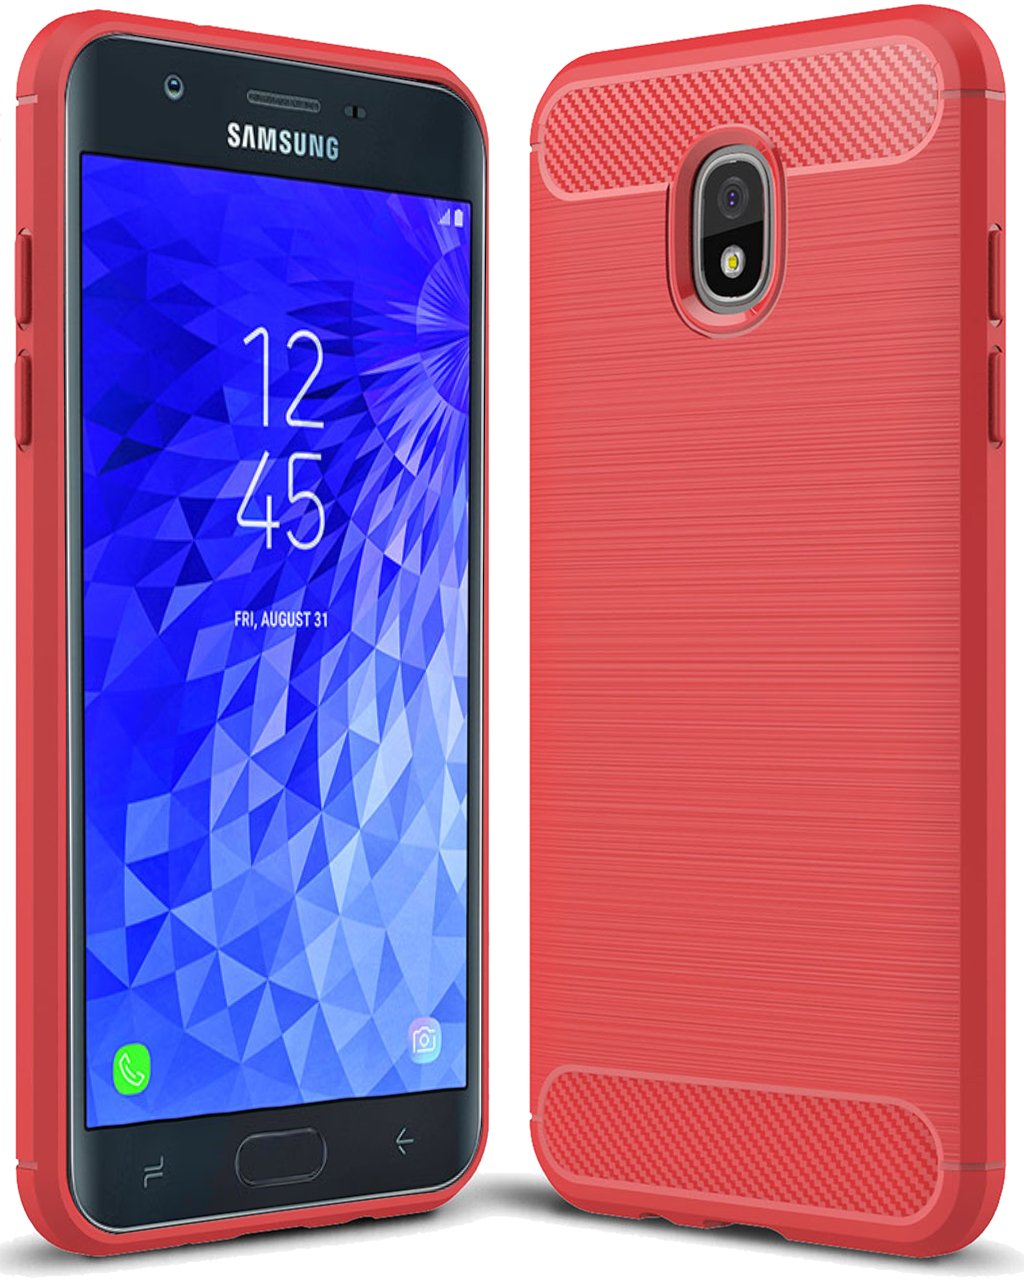 Sucnakp for Samsung Galaxy J7 2018 case, Galaxy J7 V 2nd Gen Case,Galaxy J7 Refine Case,Galaxy J7 Aero,J7 Star,J7 Top,J7 Crown,J7 Aura,J7 Eon,J737V,J737T,TPU Protective Case Cover(Red)